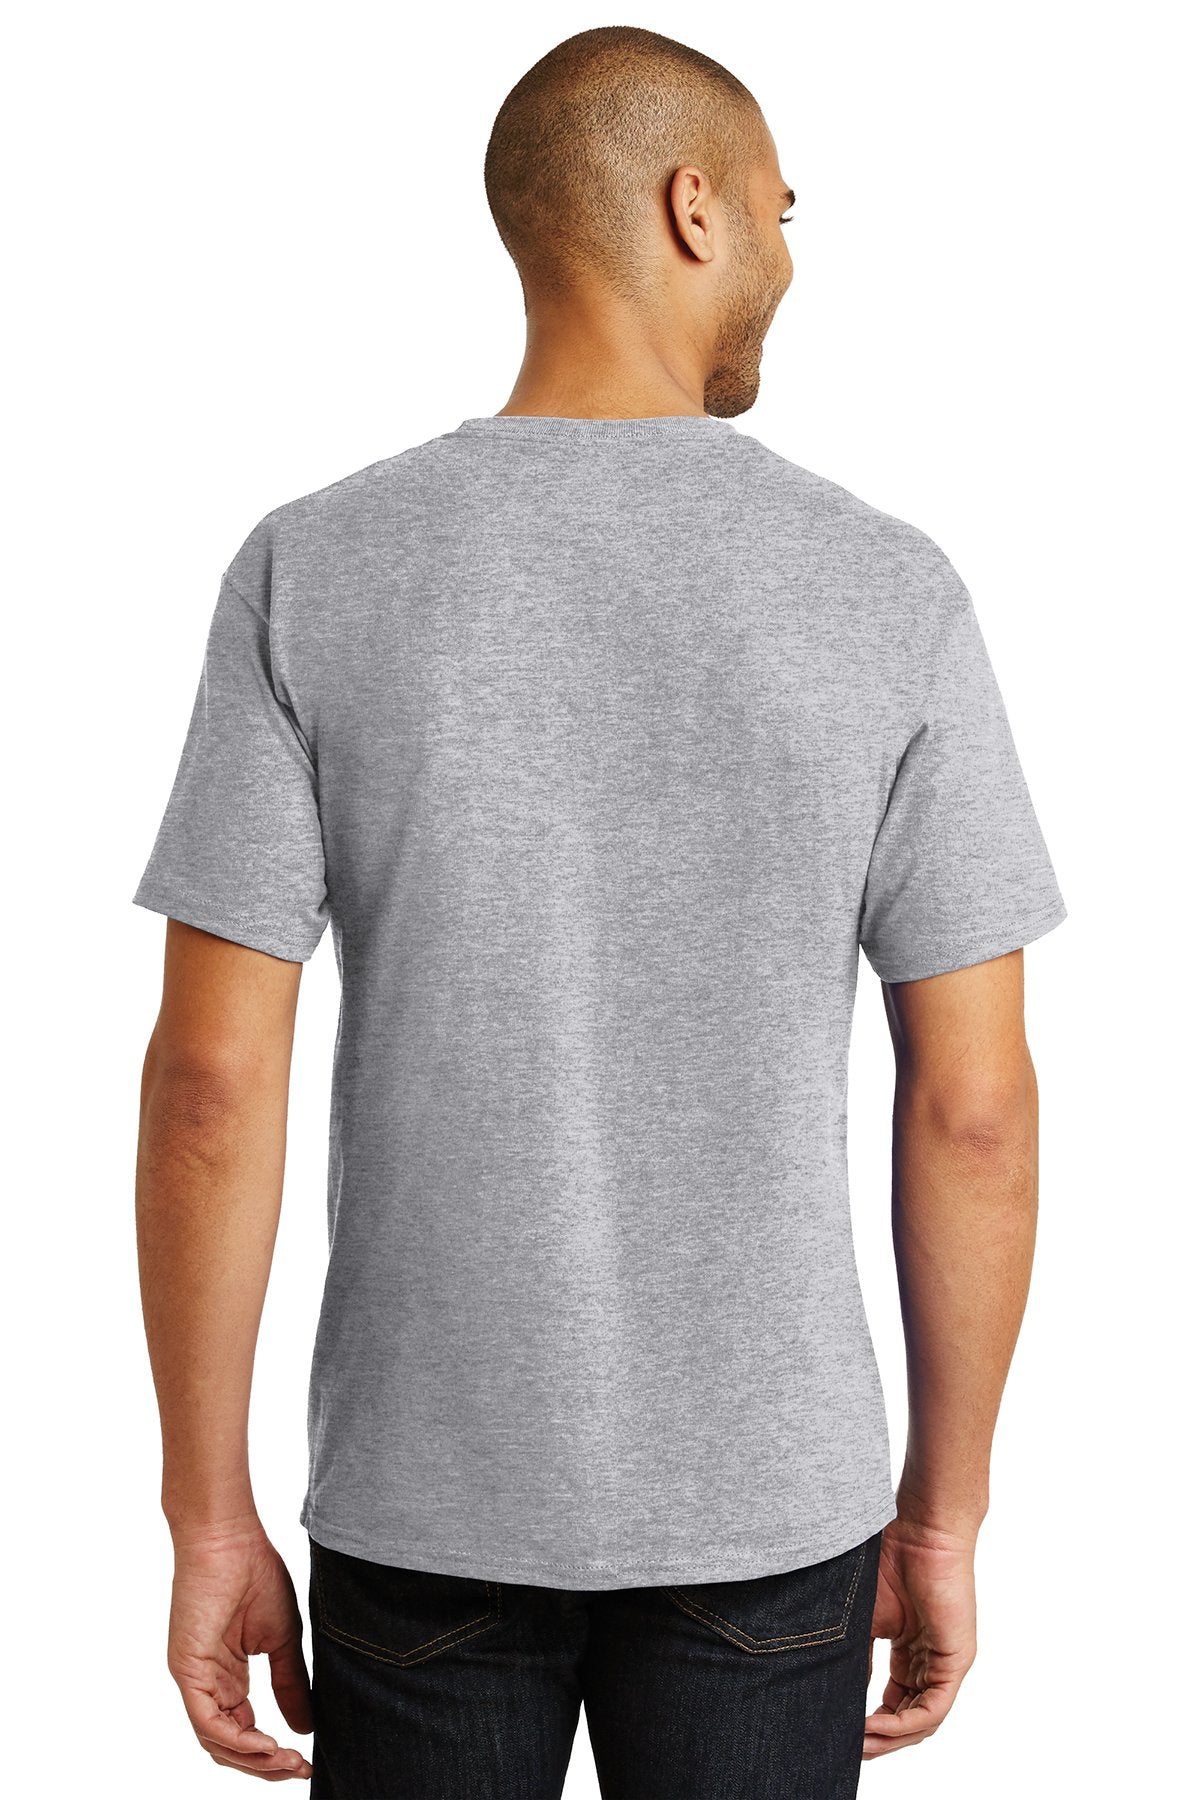 hanes tagless cotton t shirt 5250 light steel